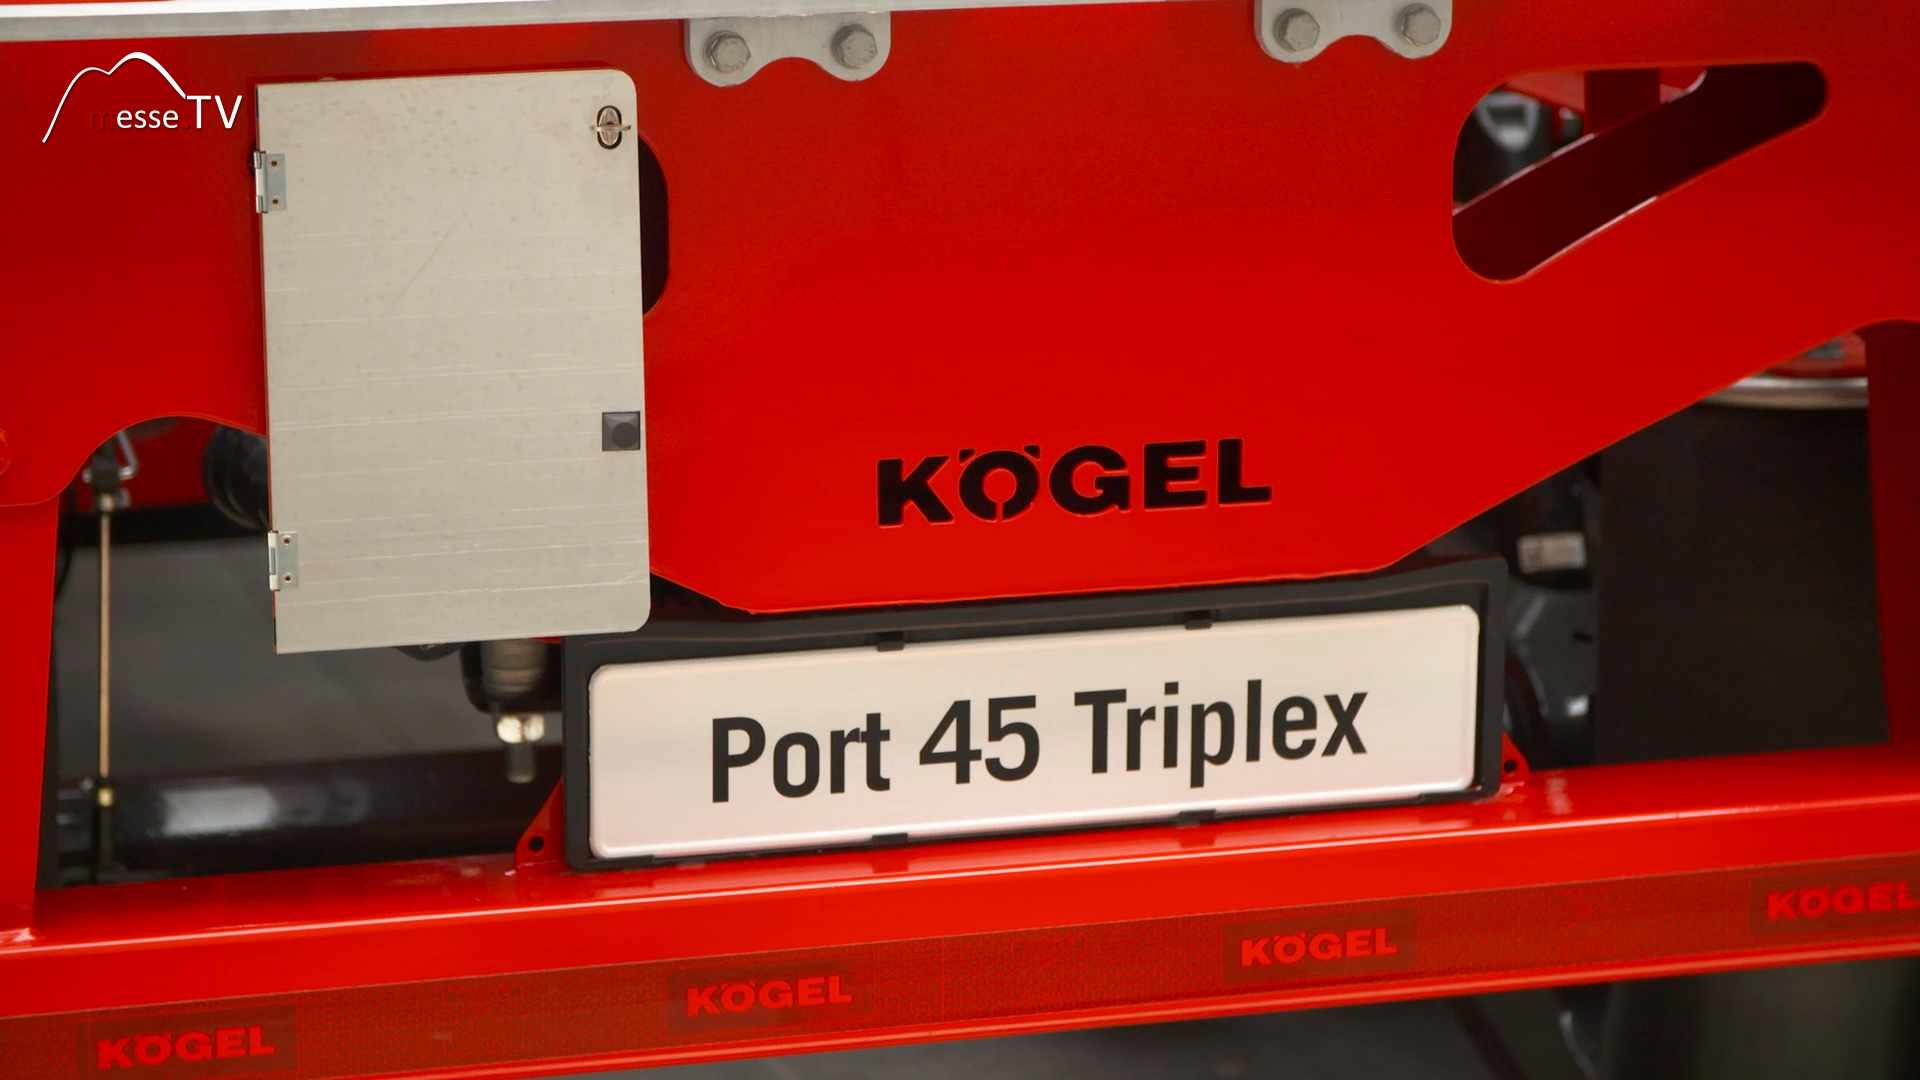 KOEGEL Trailer Port 45 Triplex